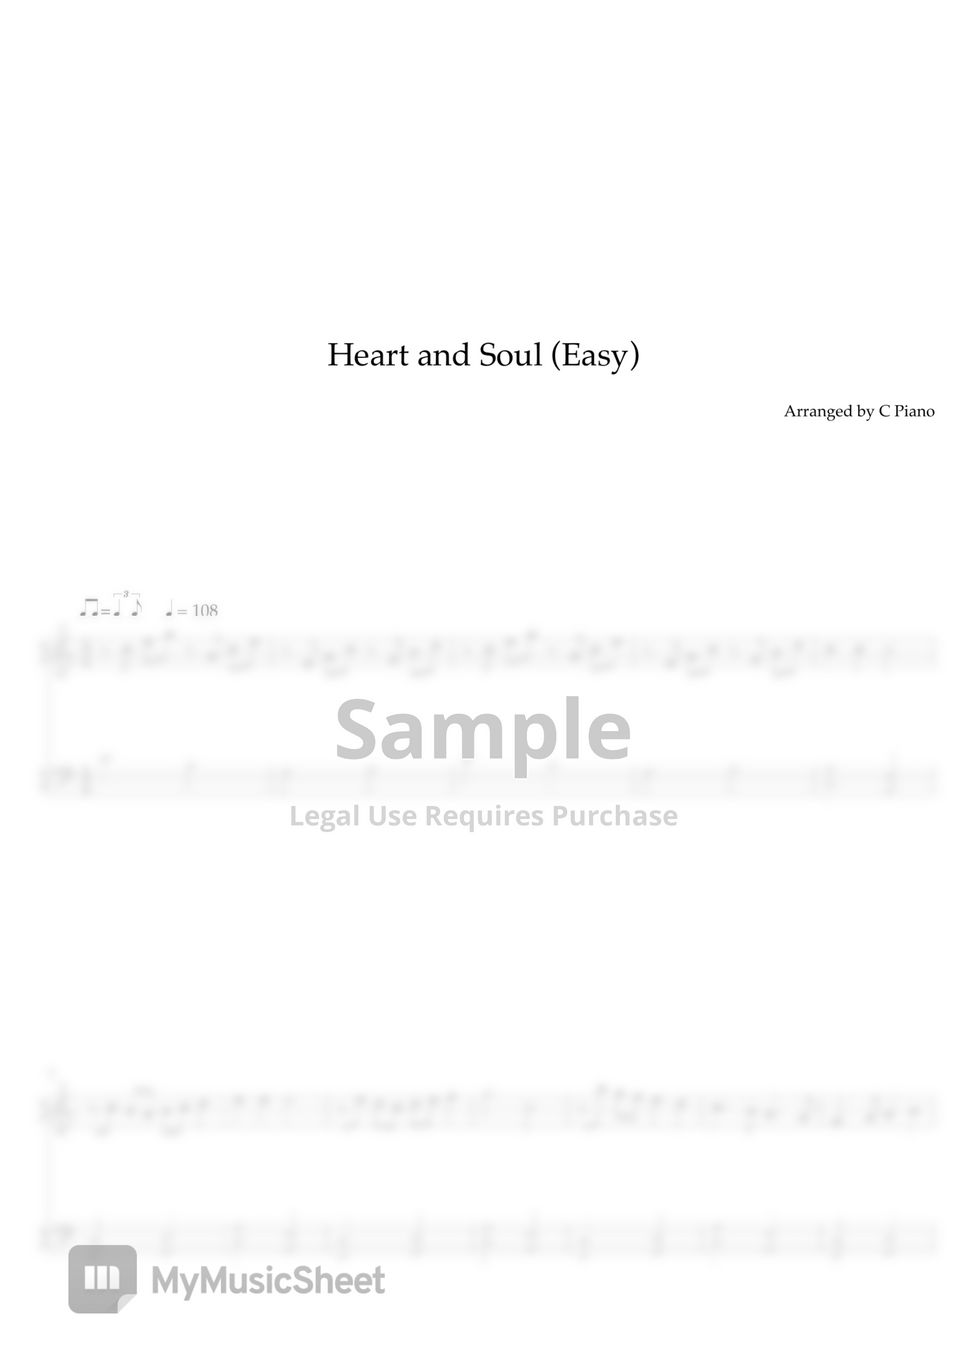 Hoagy Carmichael - Heart and Soul (Easy) by C Piano